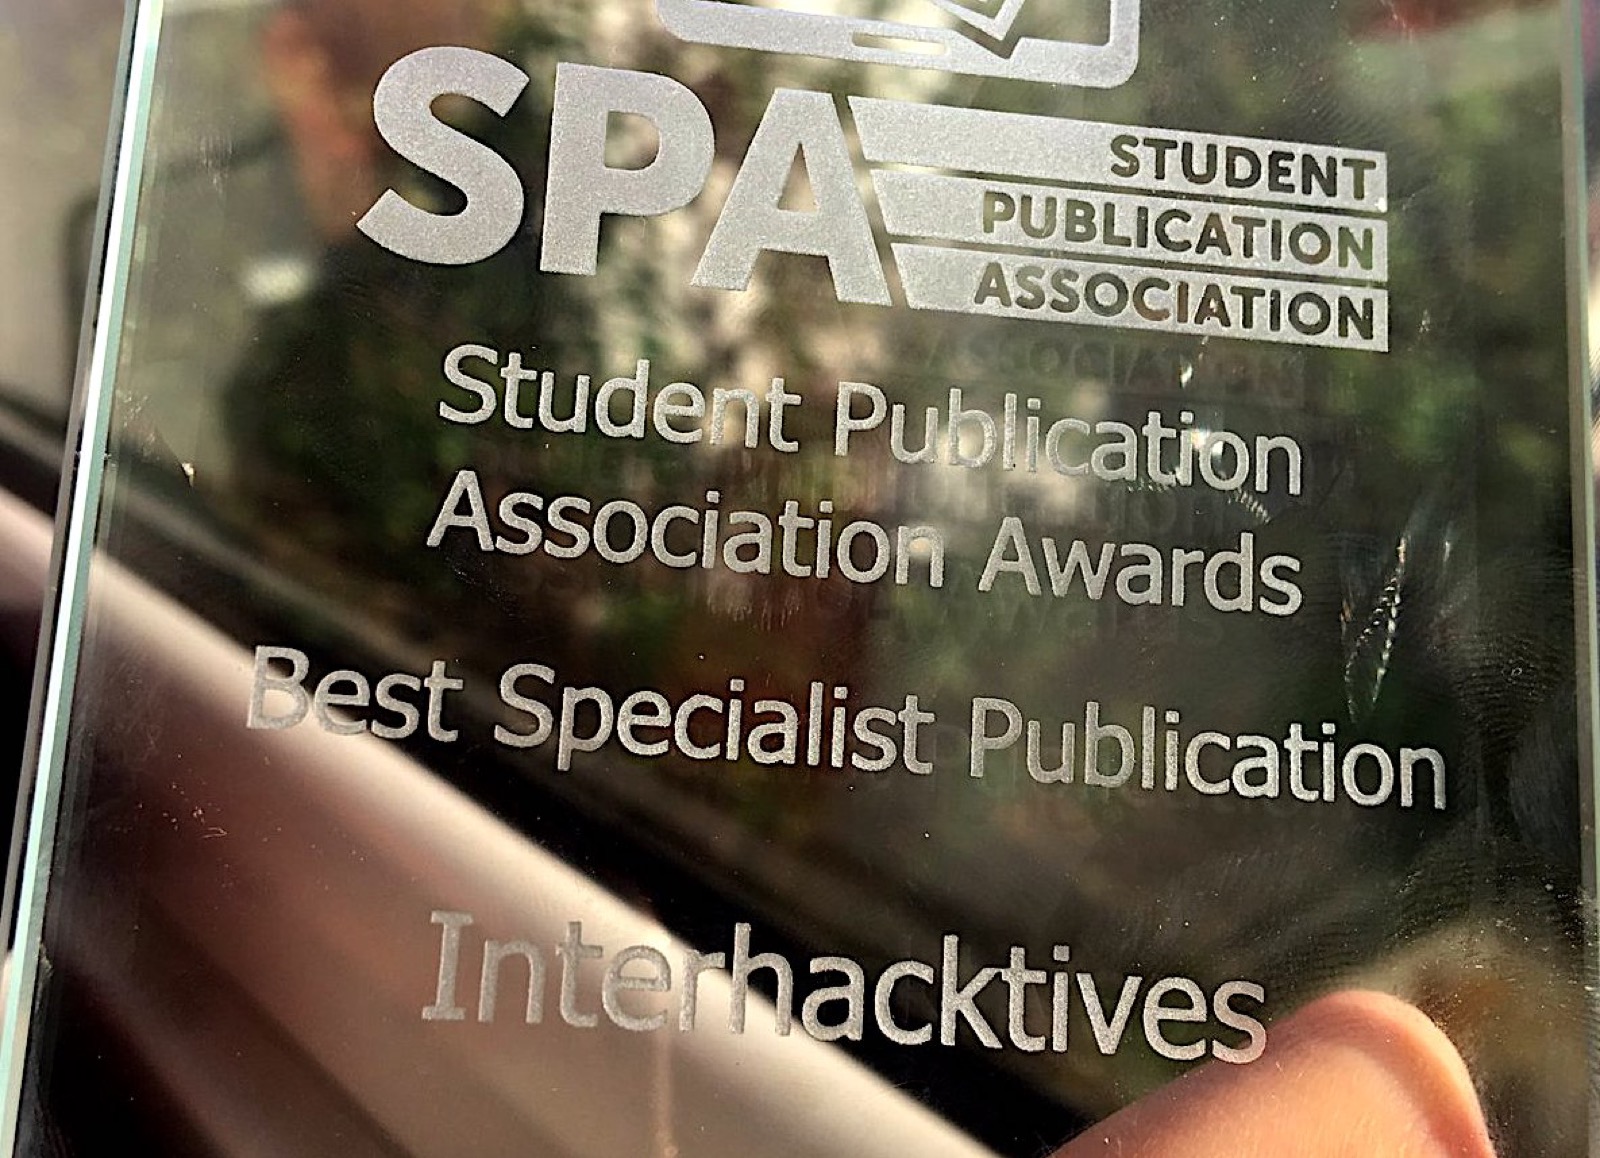 Interhacktives wins best student specialist publication